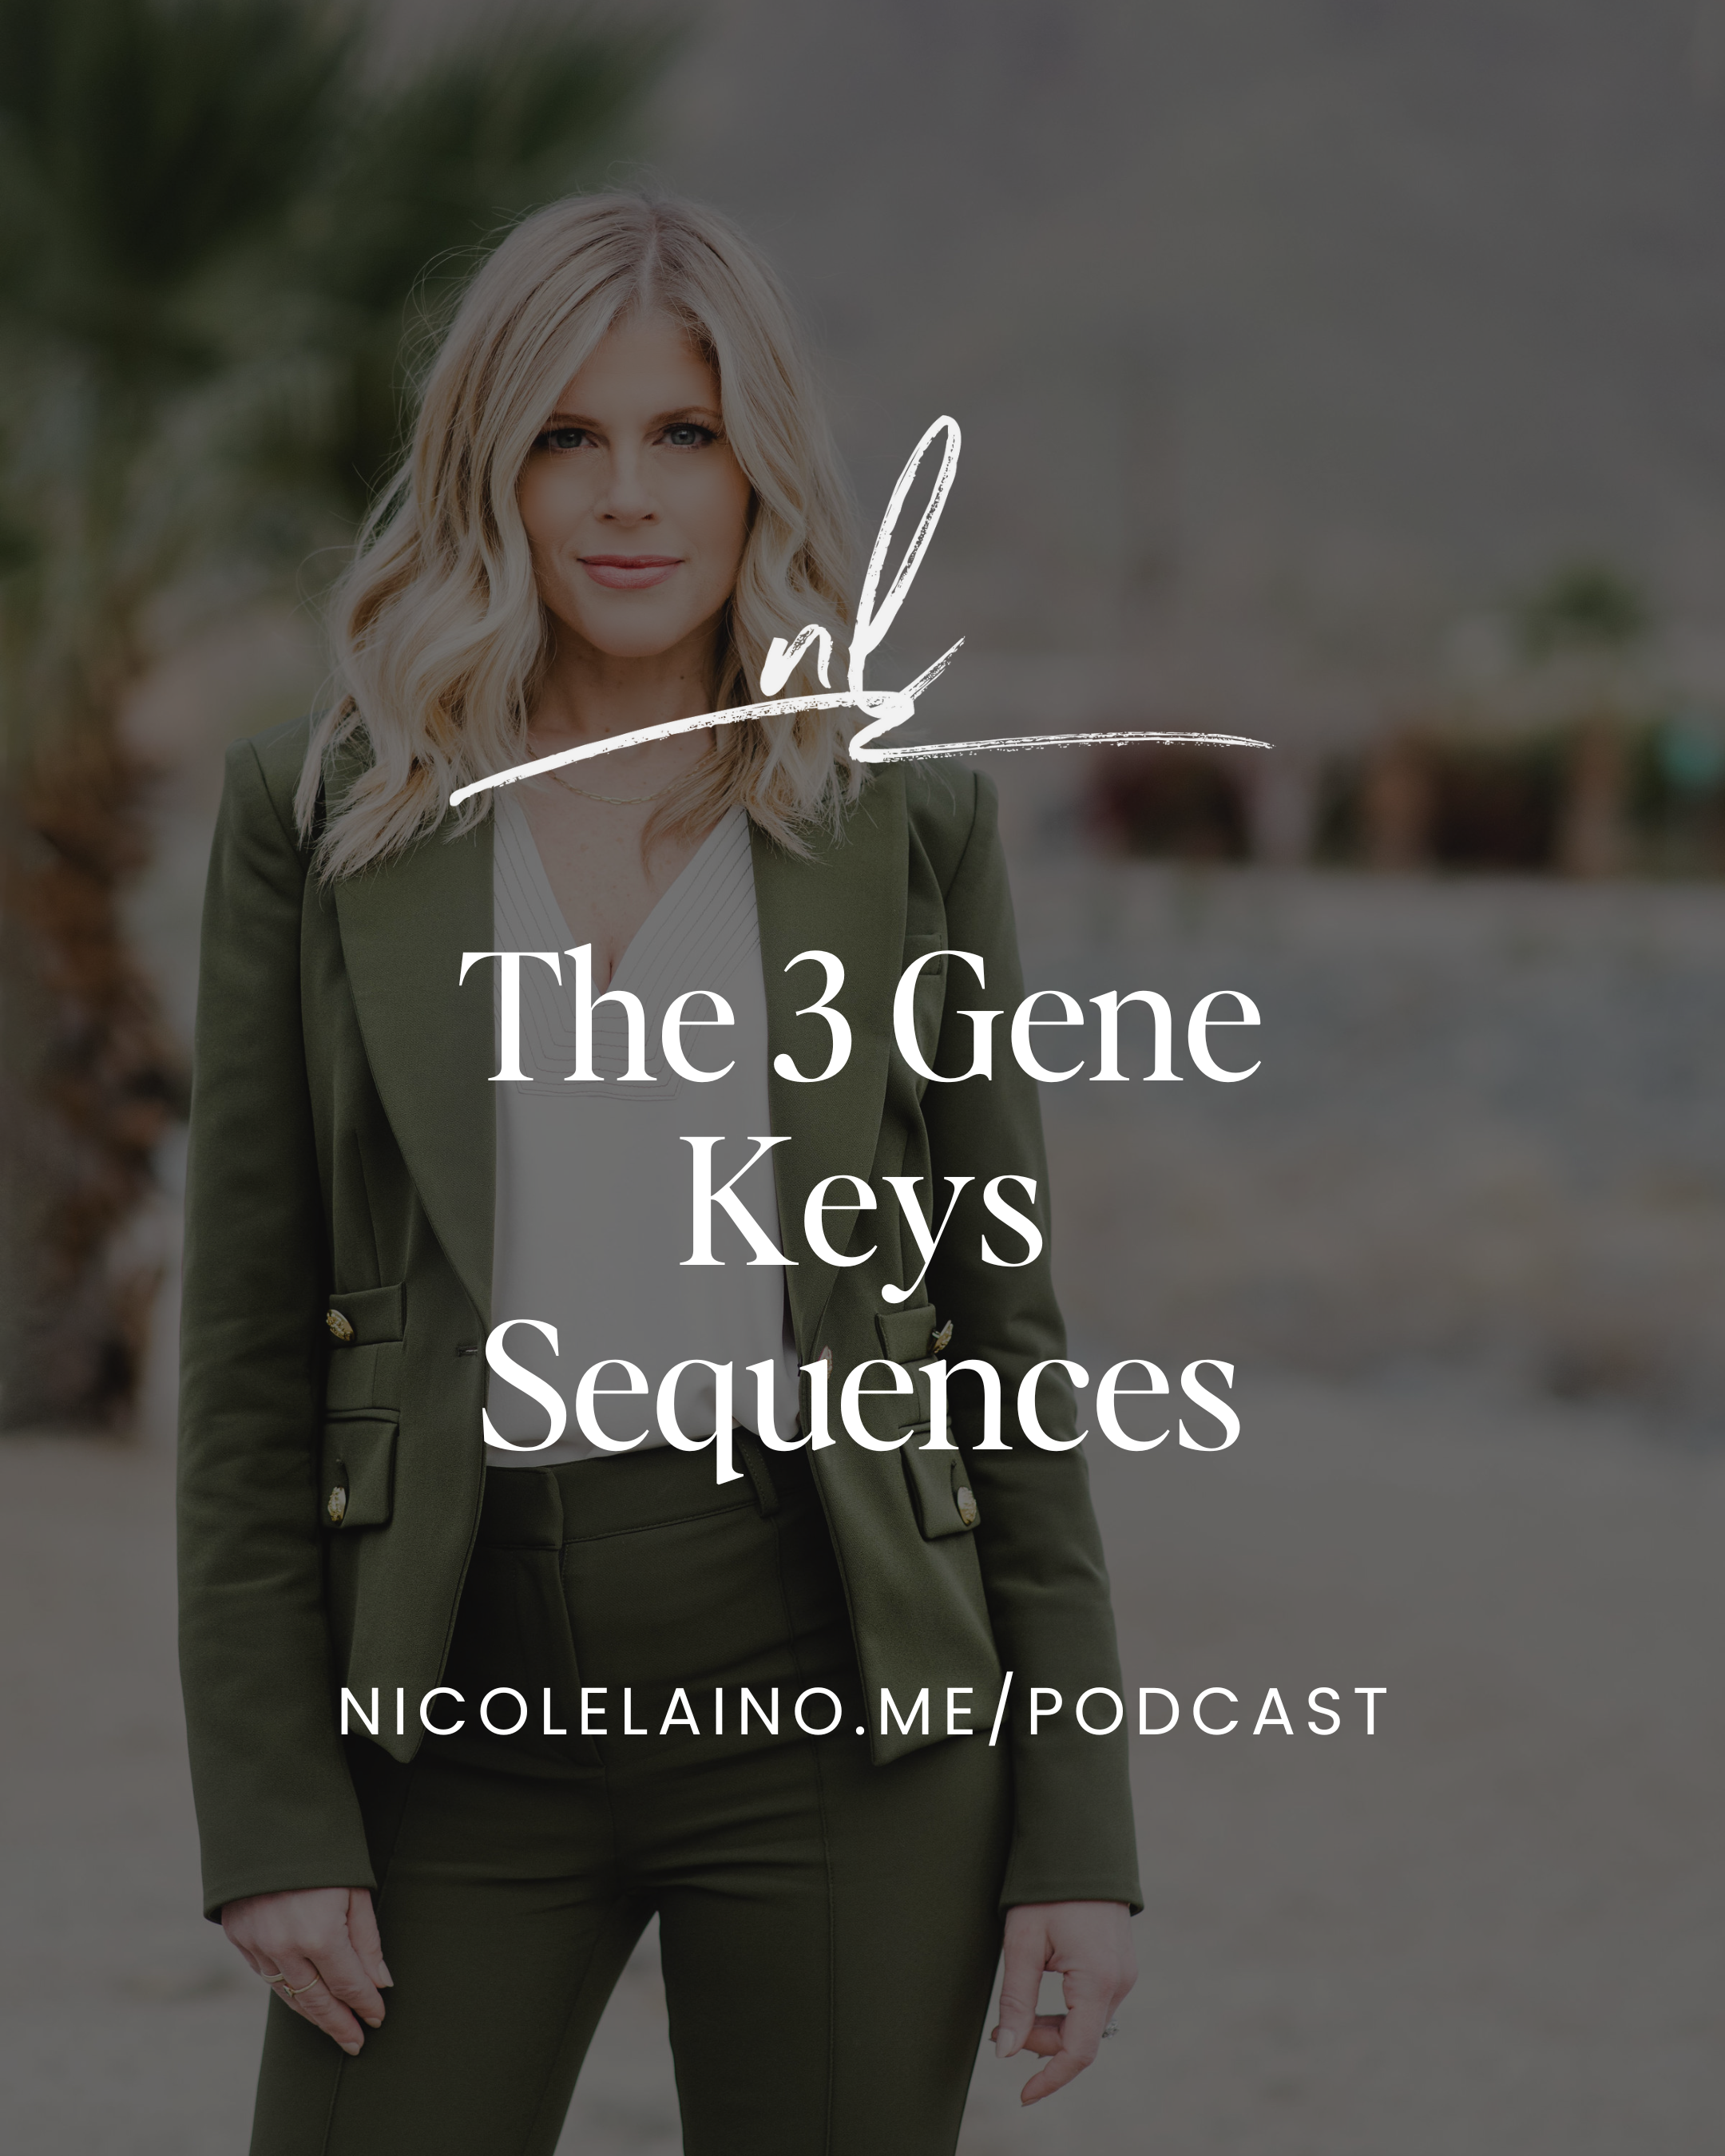 The 3 Gene Keys Sequences